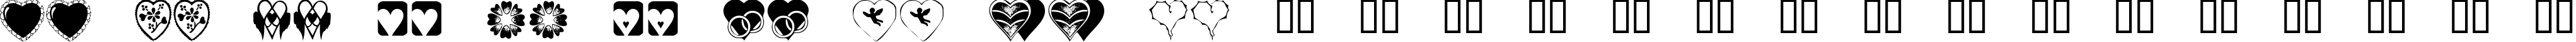 Пример написания английского алфавита шрифтом KR Heartiness